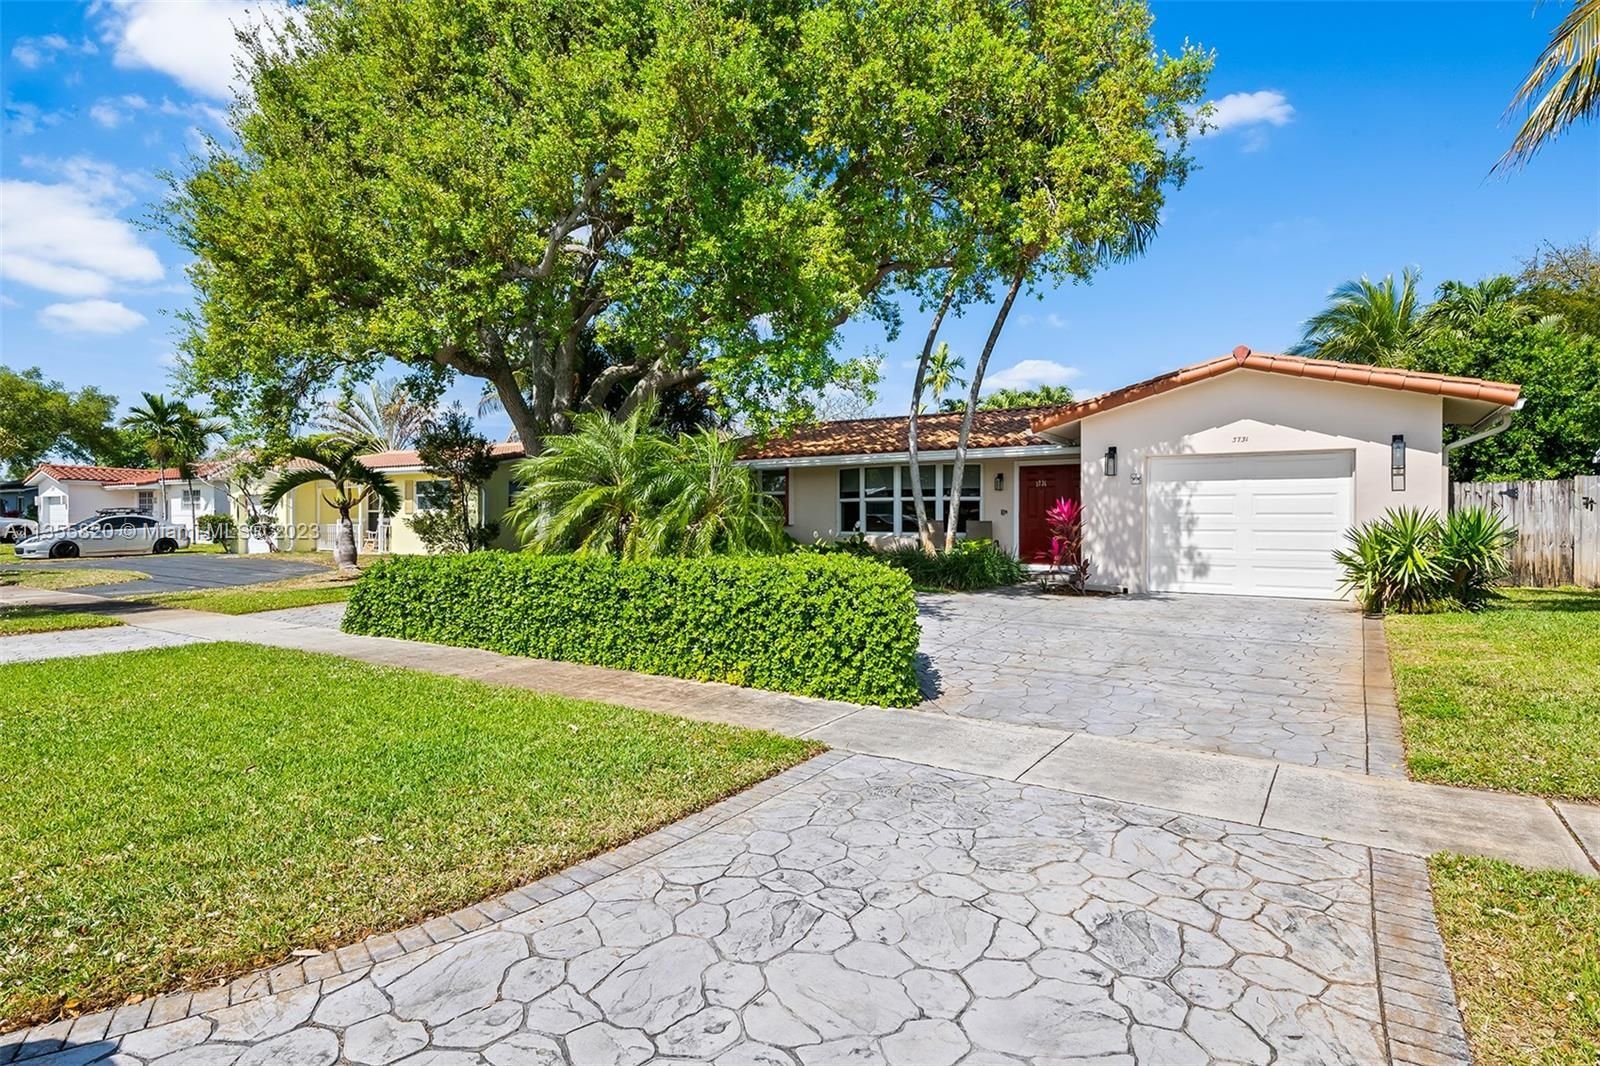 Real estate property located at 3731 Thomas St, Broward County, Hollywood, FL